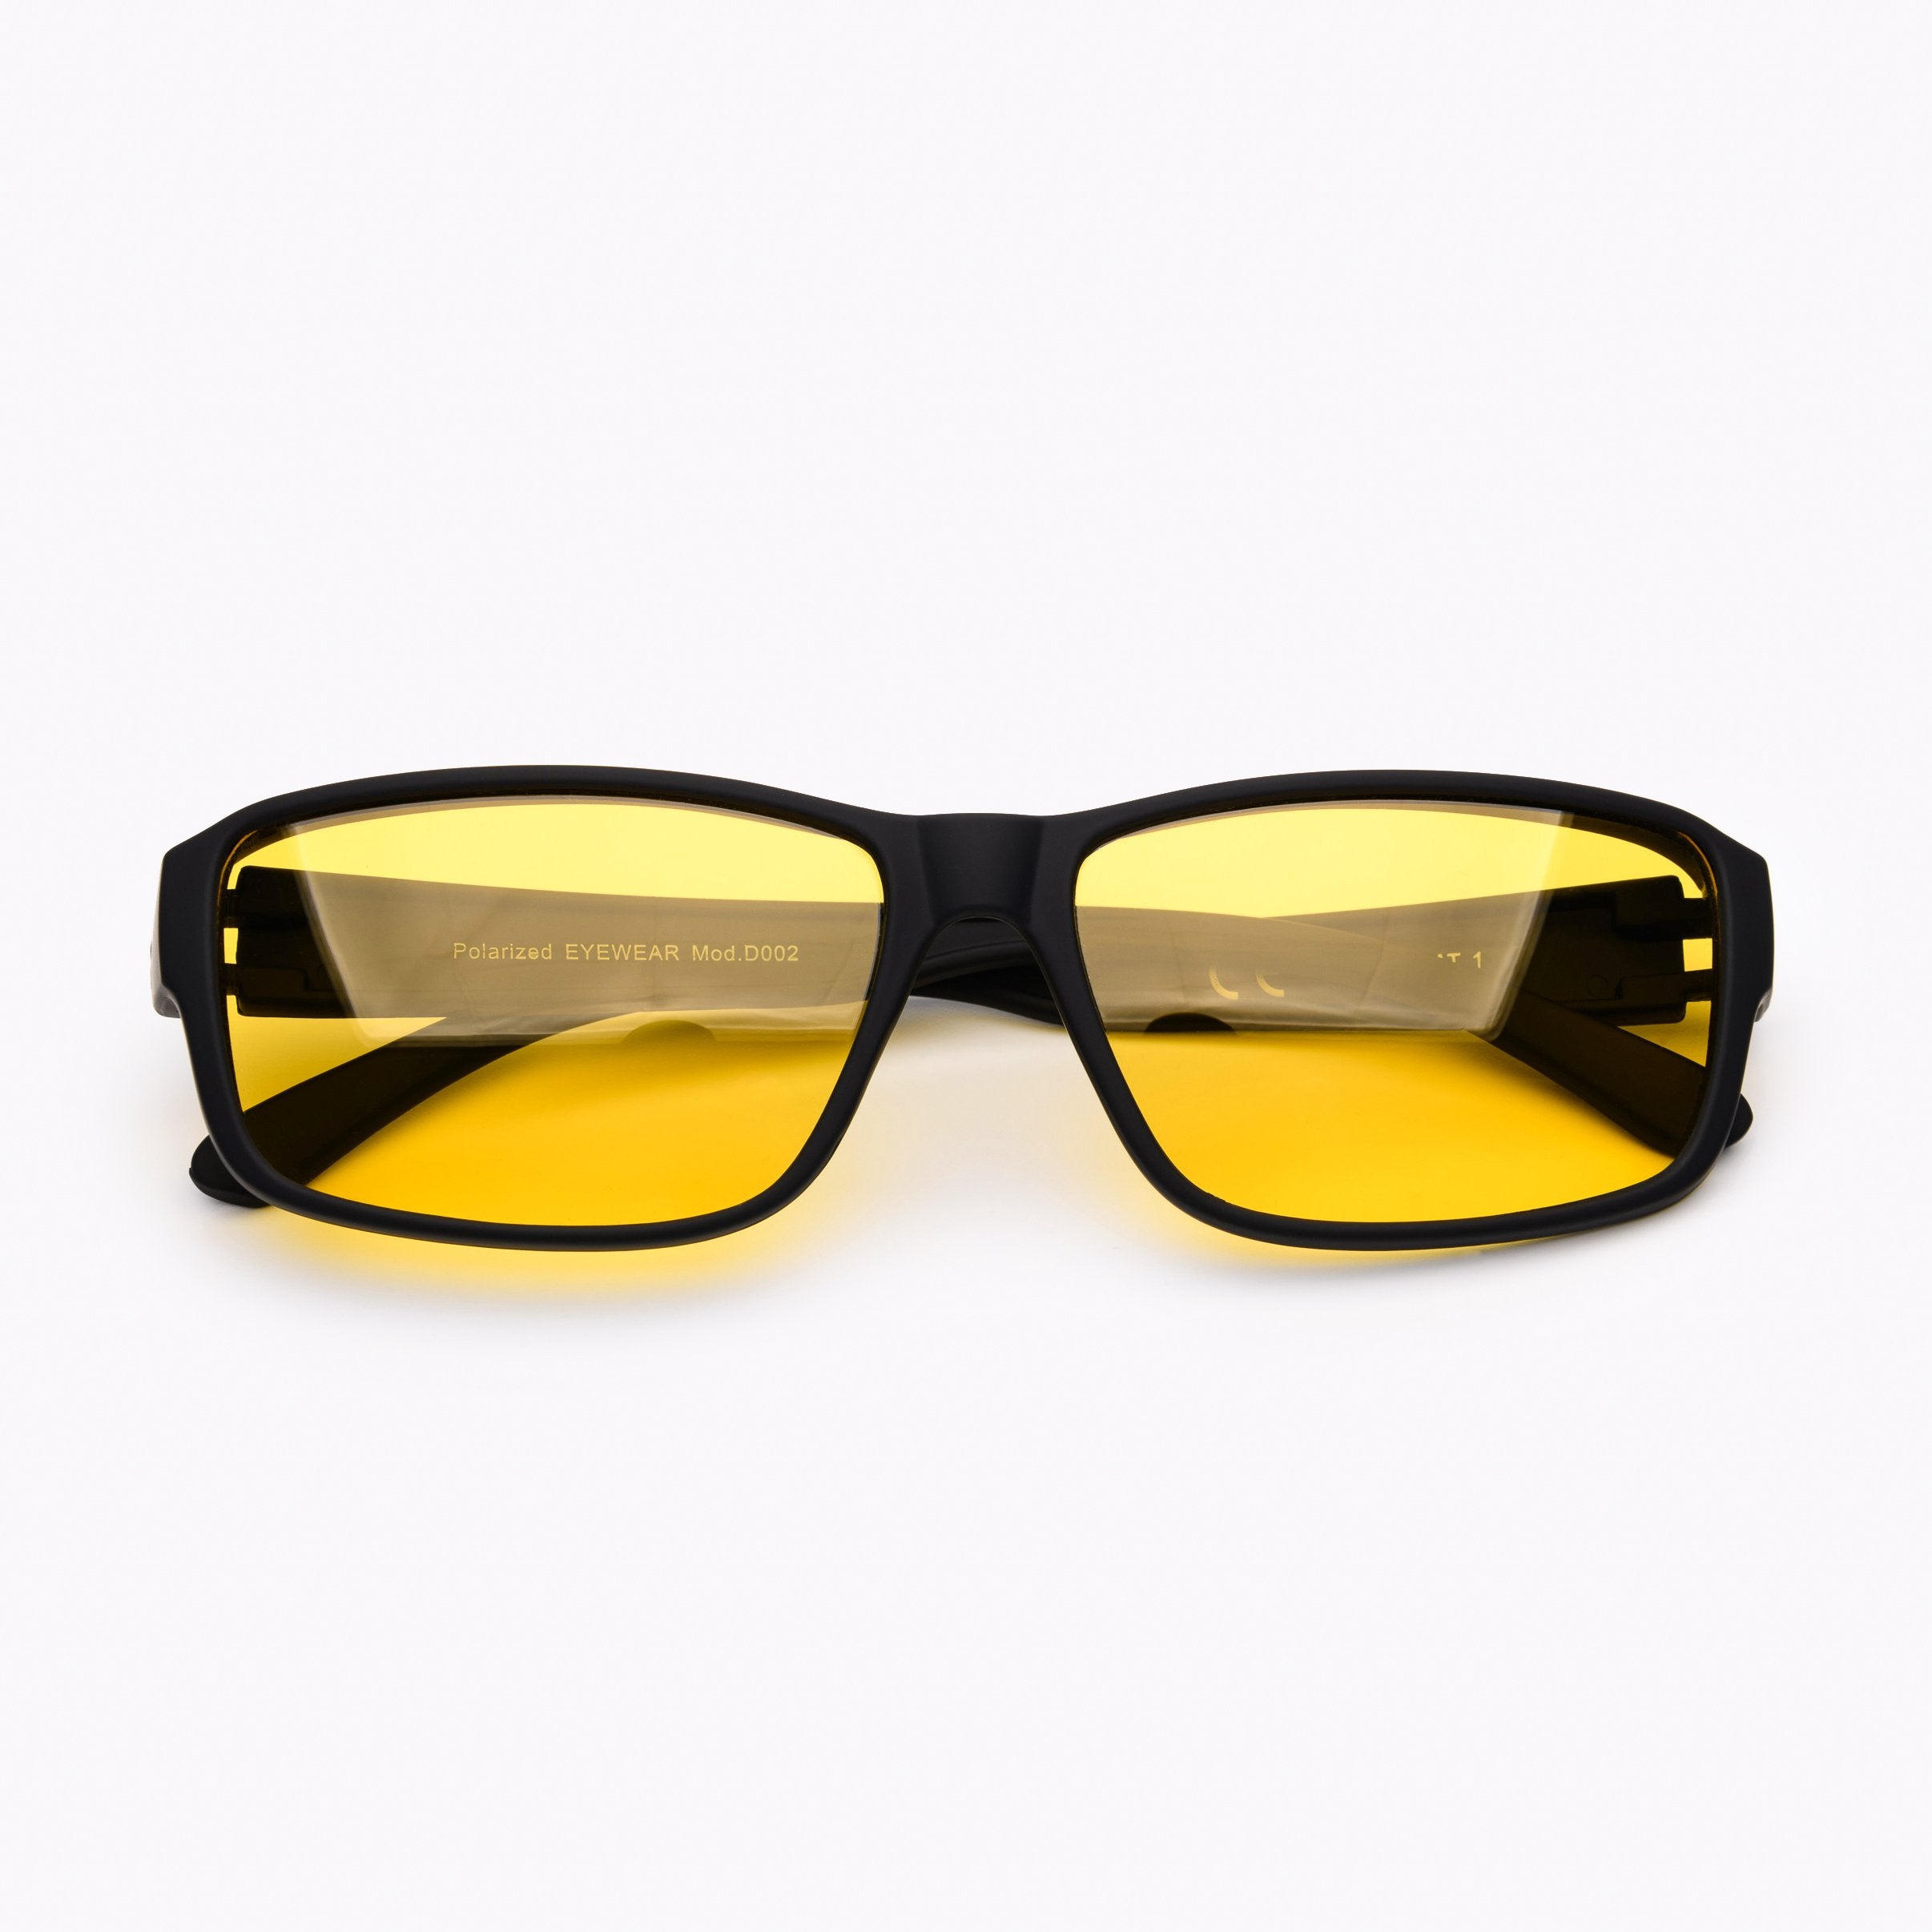 Black rectangle driving glasses